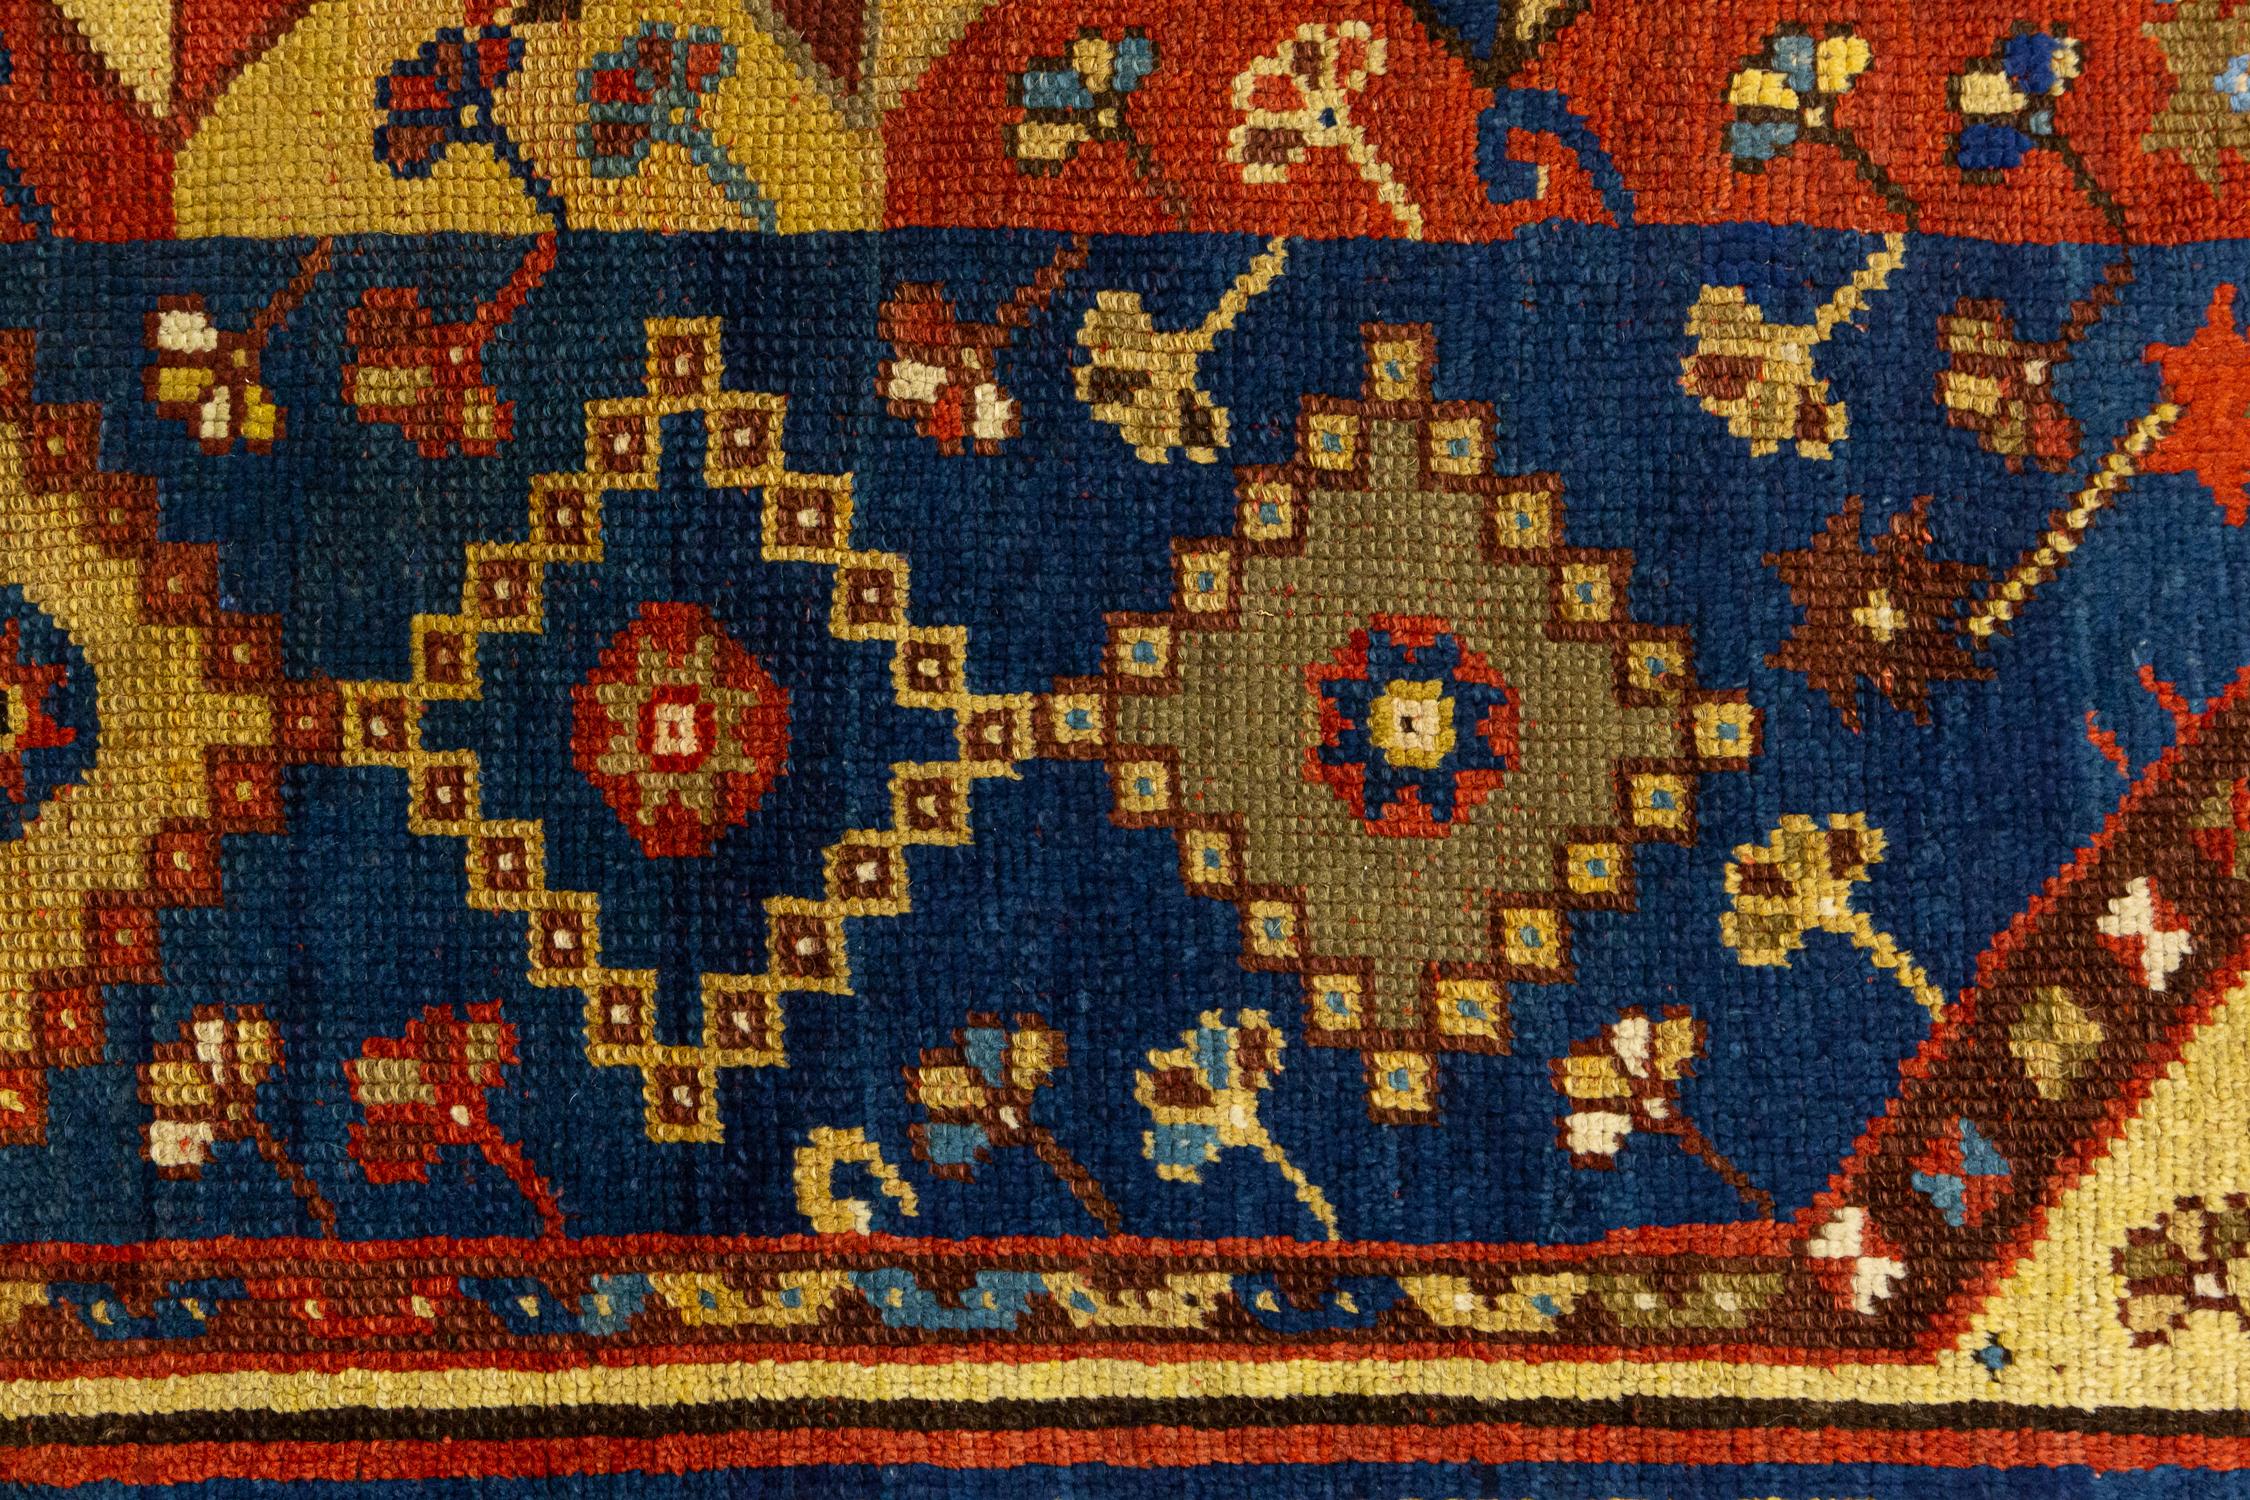 Antique Turkish Megri “Z” Motifs Wool Rug, Mid-19th Century For Sale 4